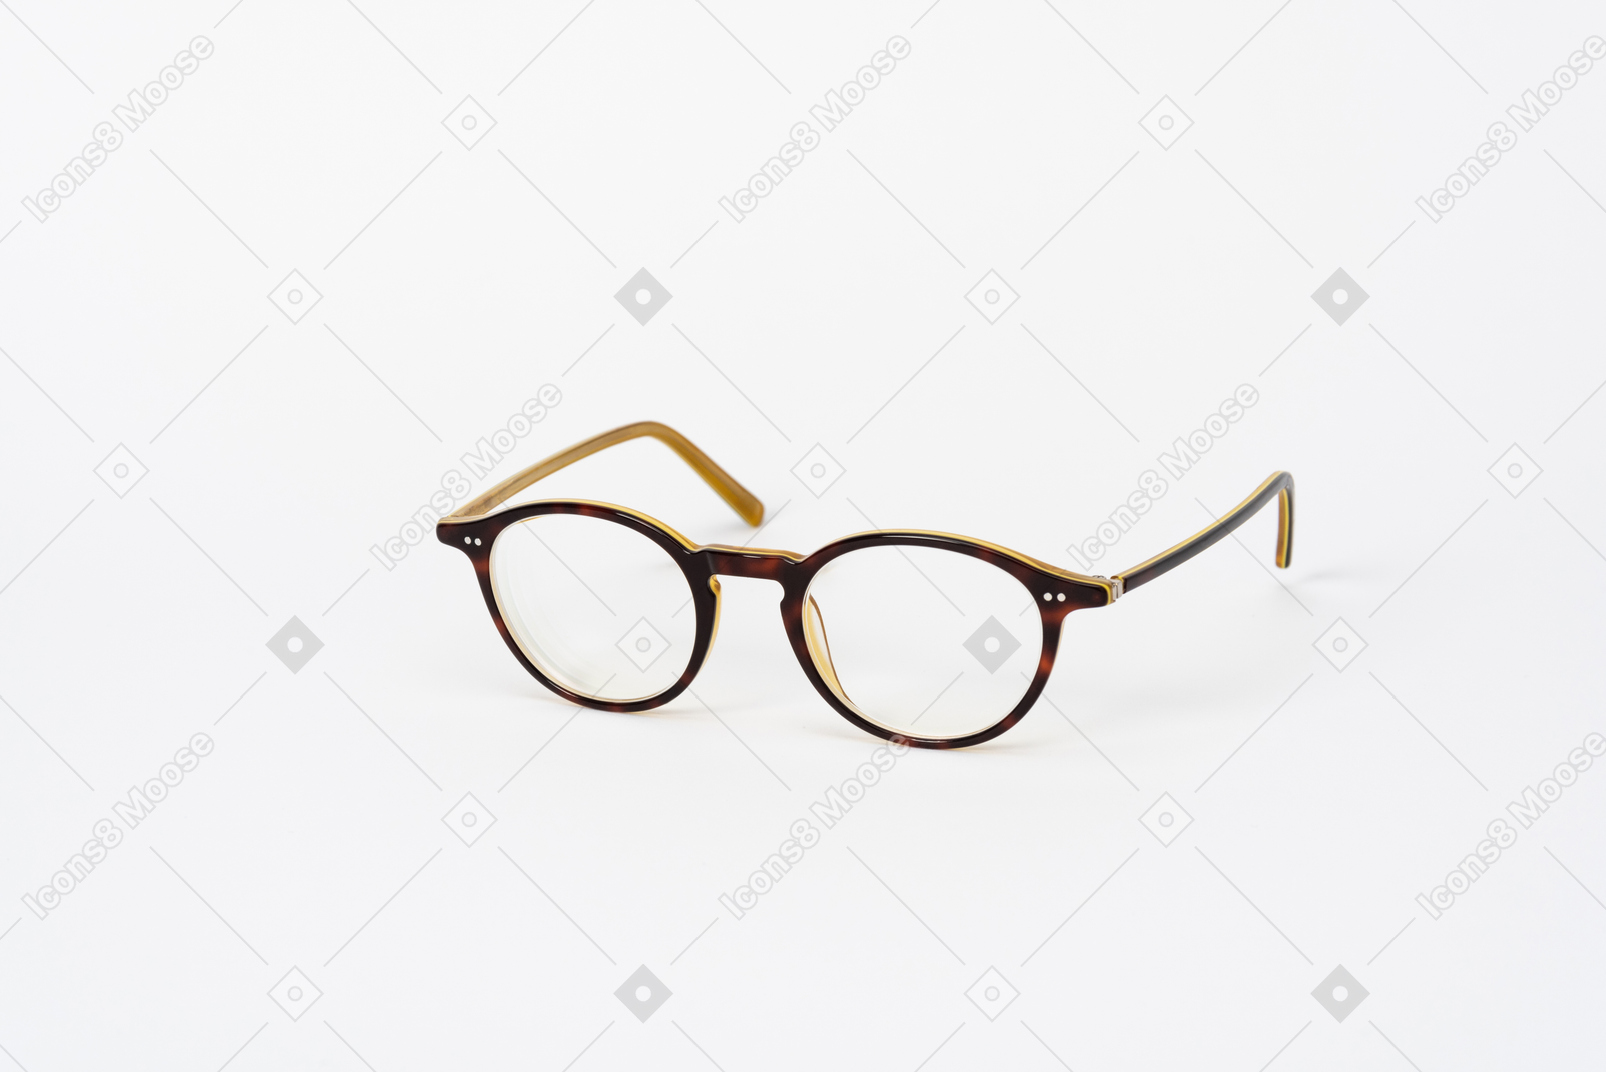 Beautiful and elegant eyeglasses